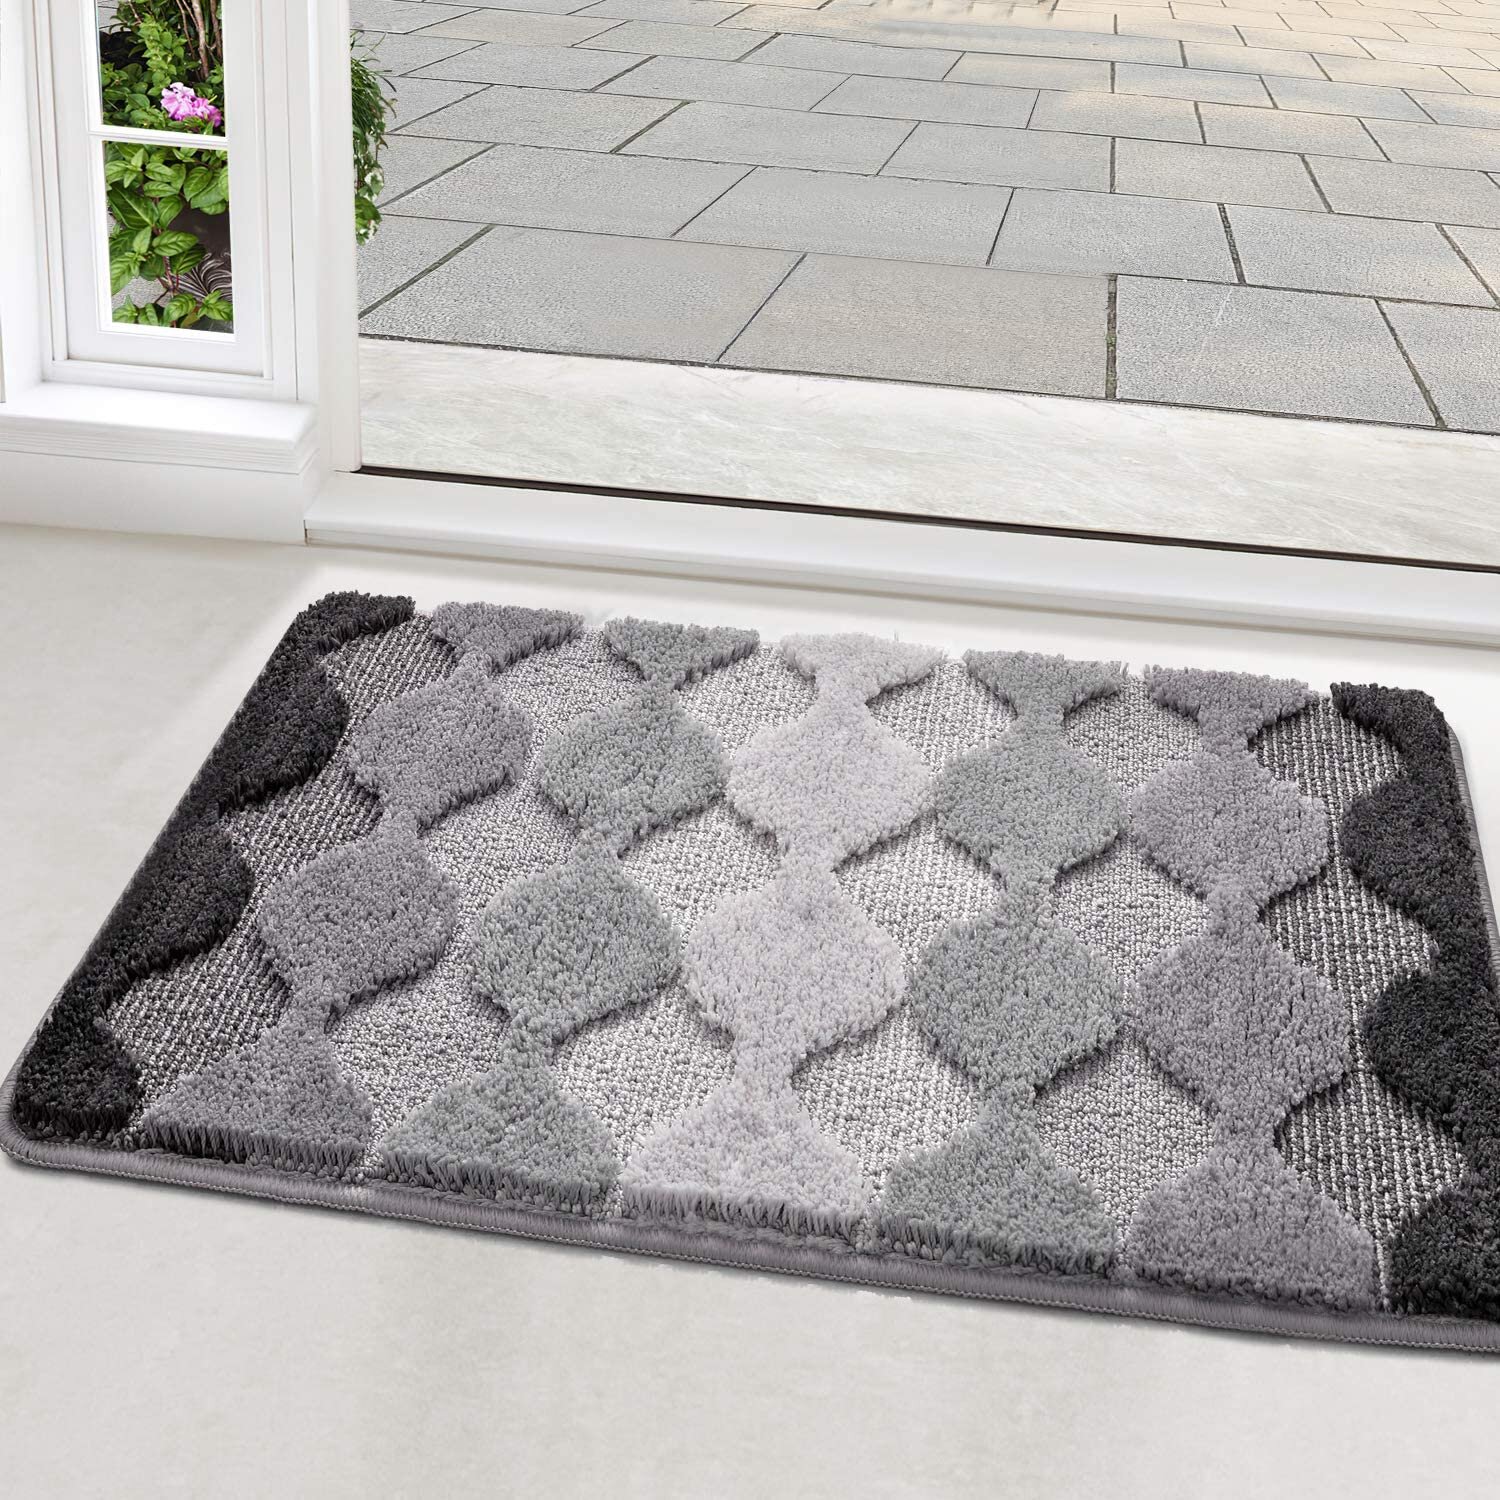 ALAZA Dragonfly Vintage Non-Slip Area Rug Carpet Doormat for Kitchen Entryway Living Room Bedroom Sofa Bath 1'7 x 3'3 39x 20 